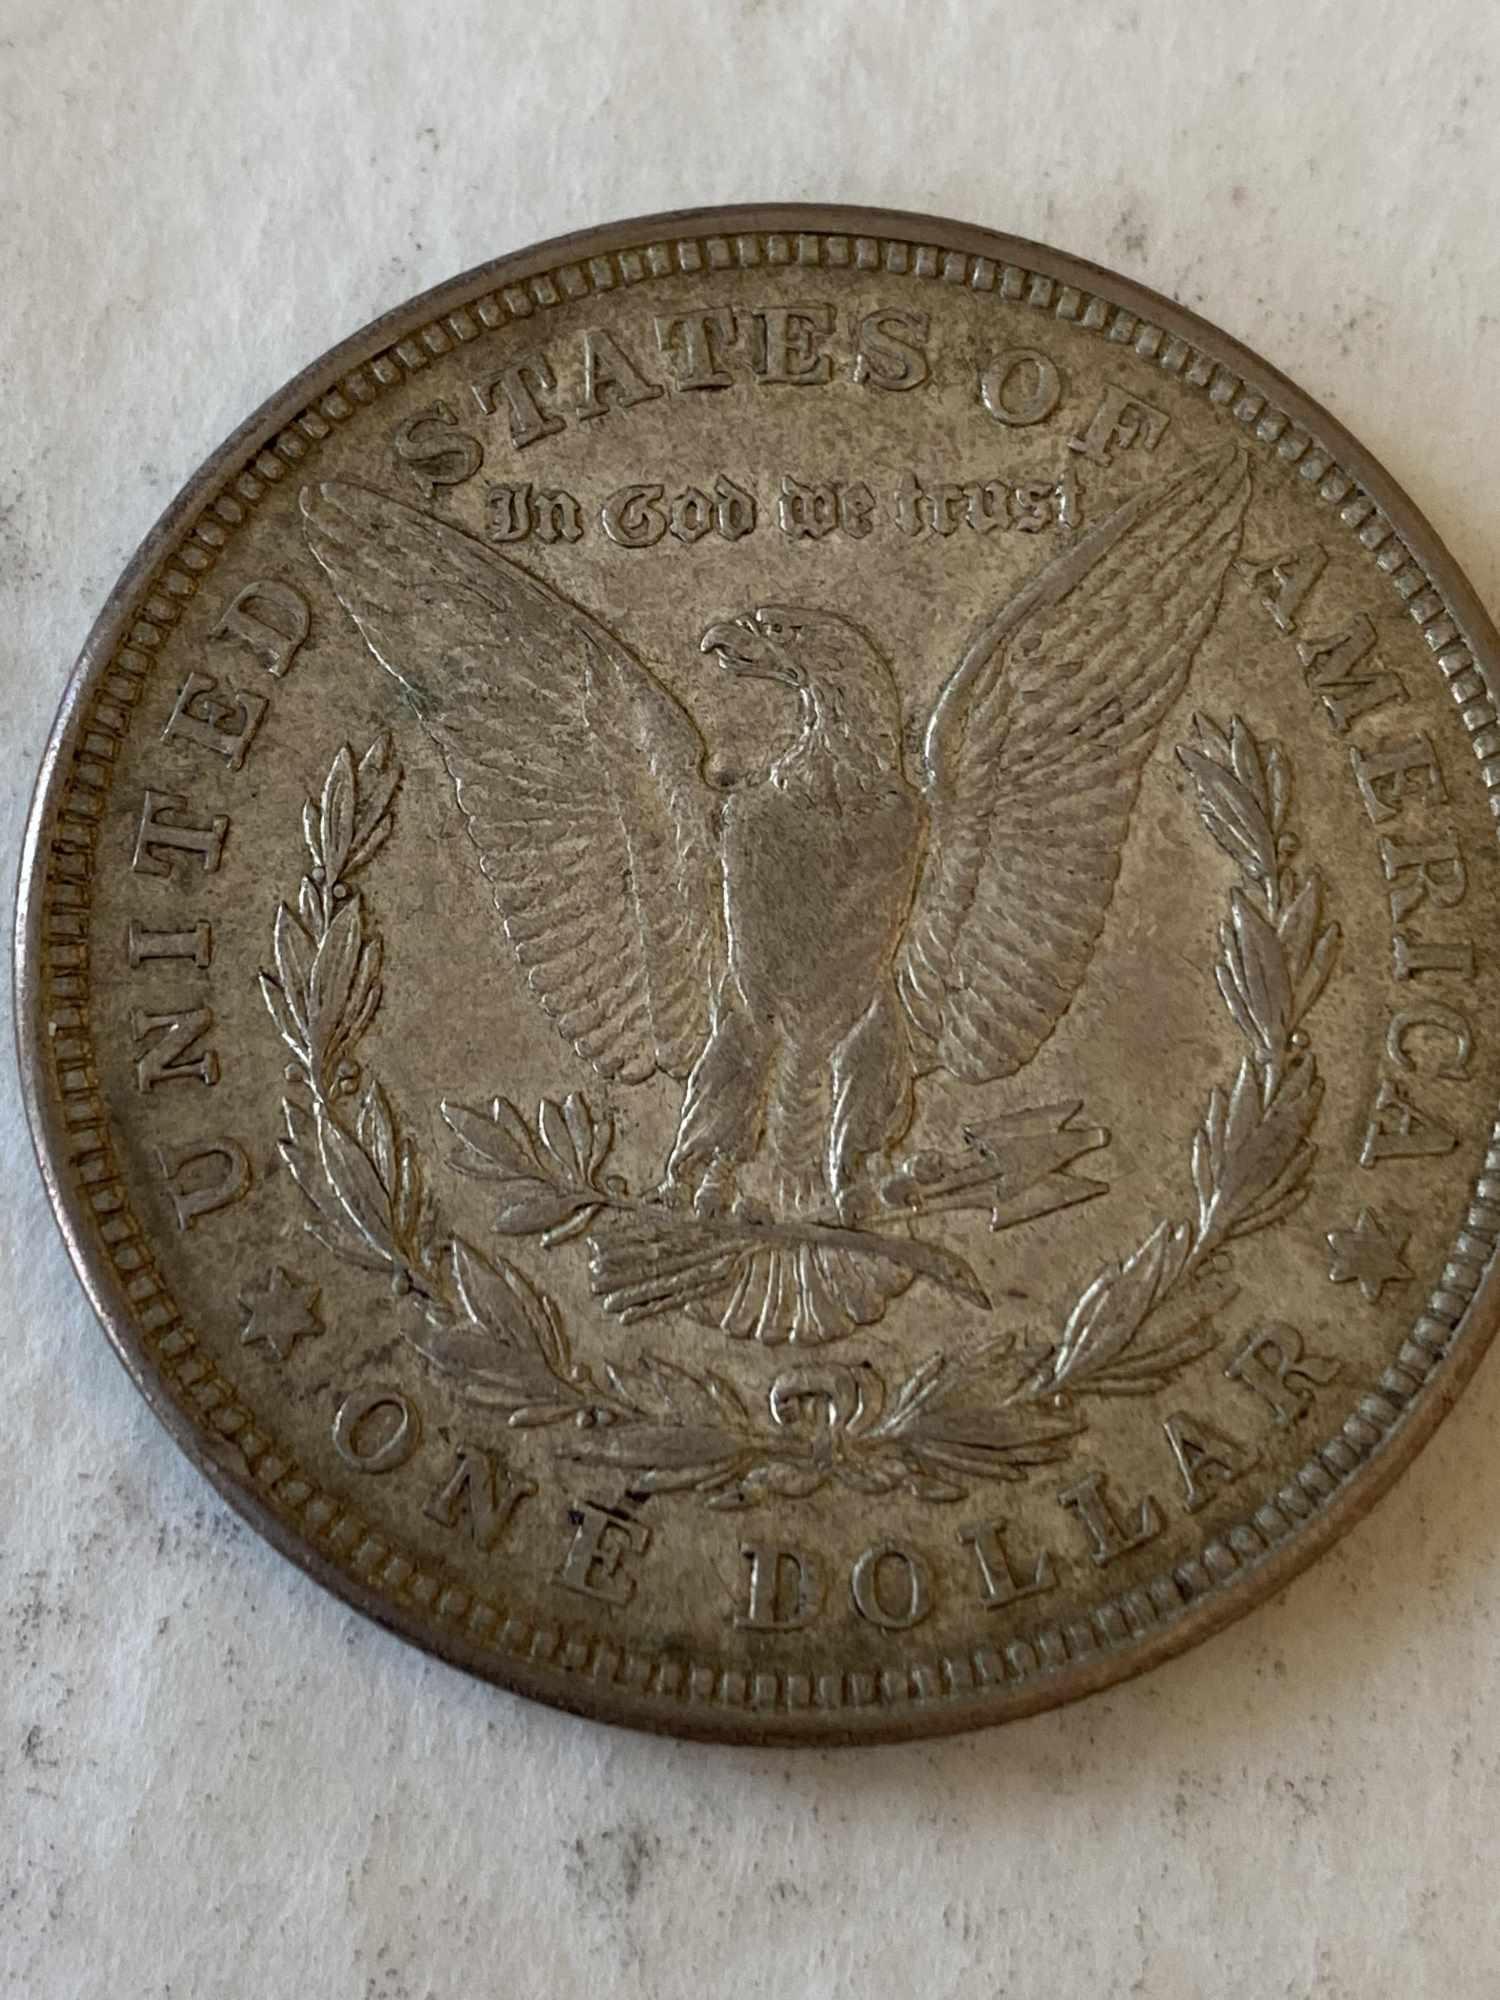 1921 MORGAN DOLLAR